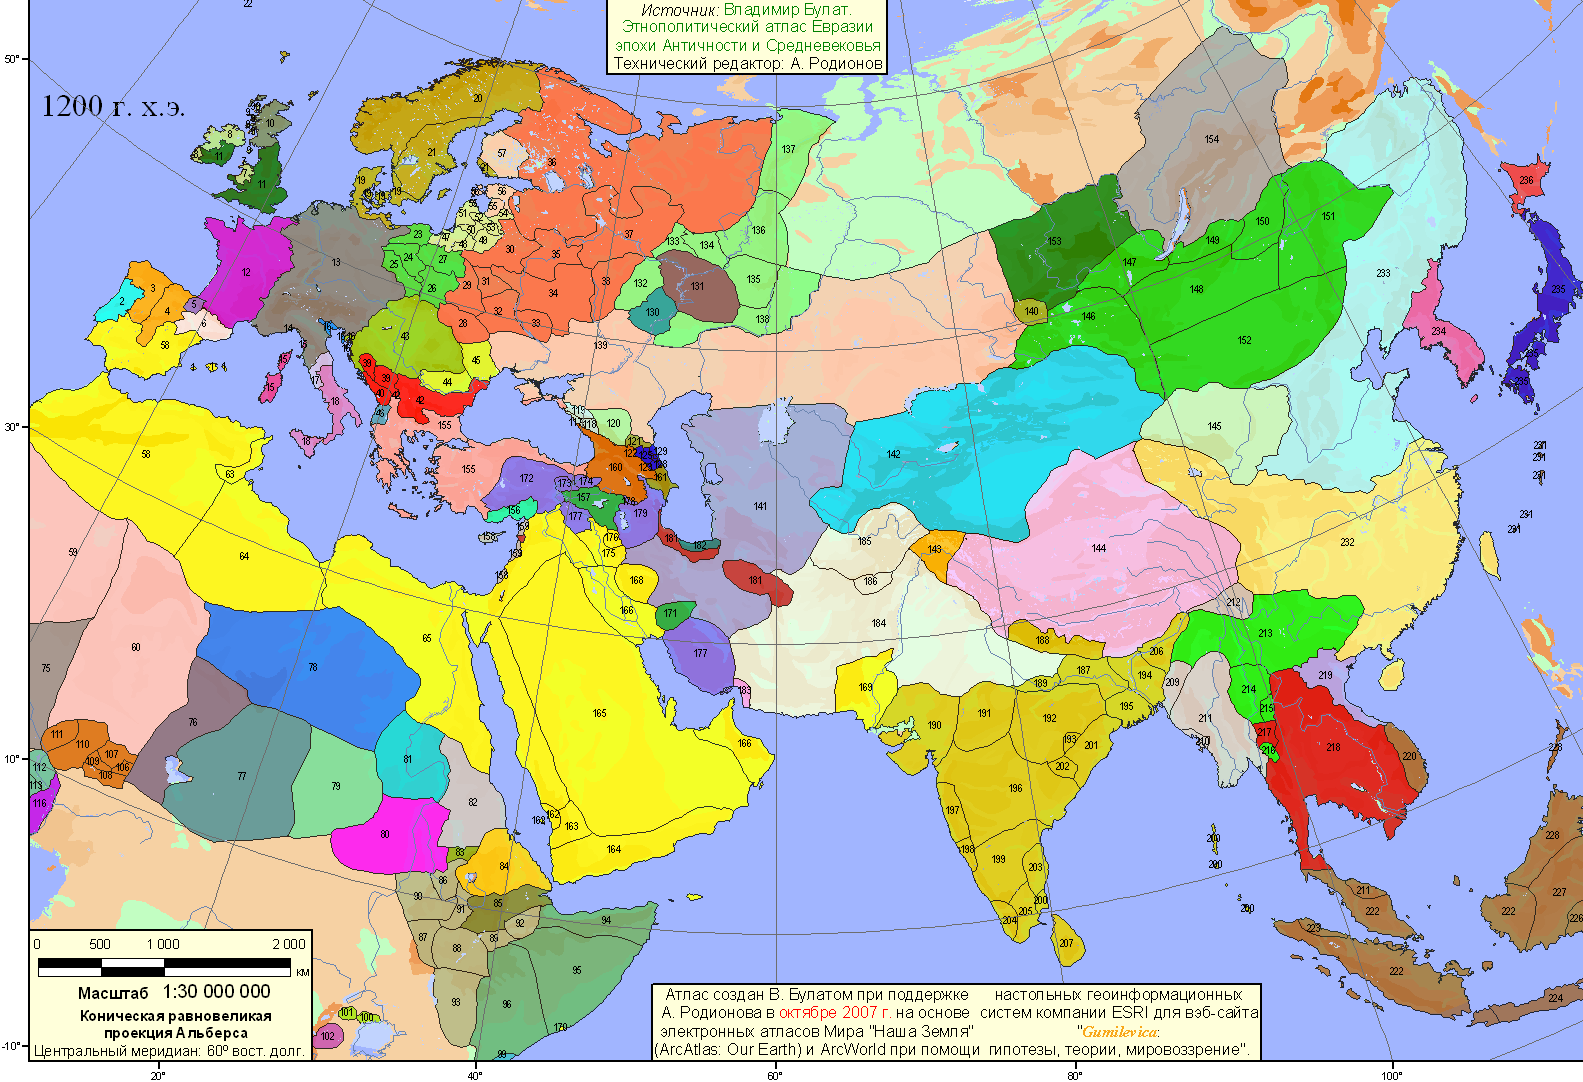 Eurasia - 1200 AD (340 Kbytes)